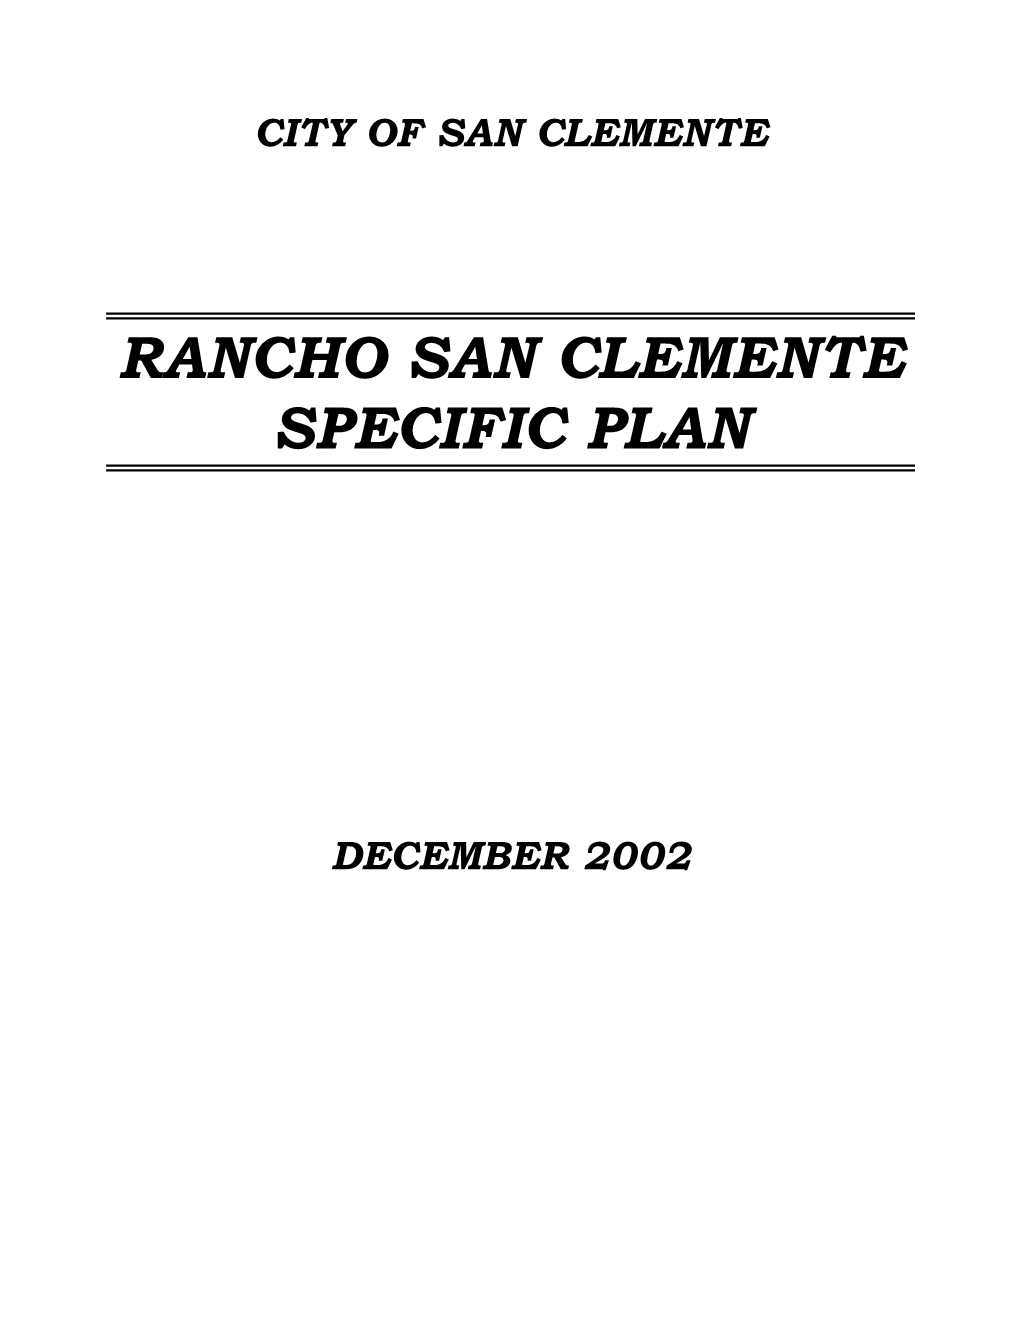 Rancho San Clemente Specific Plan